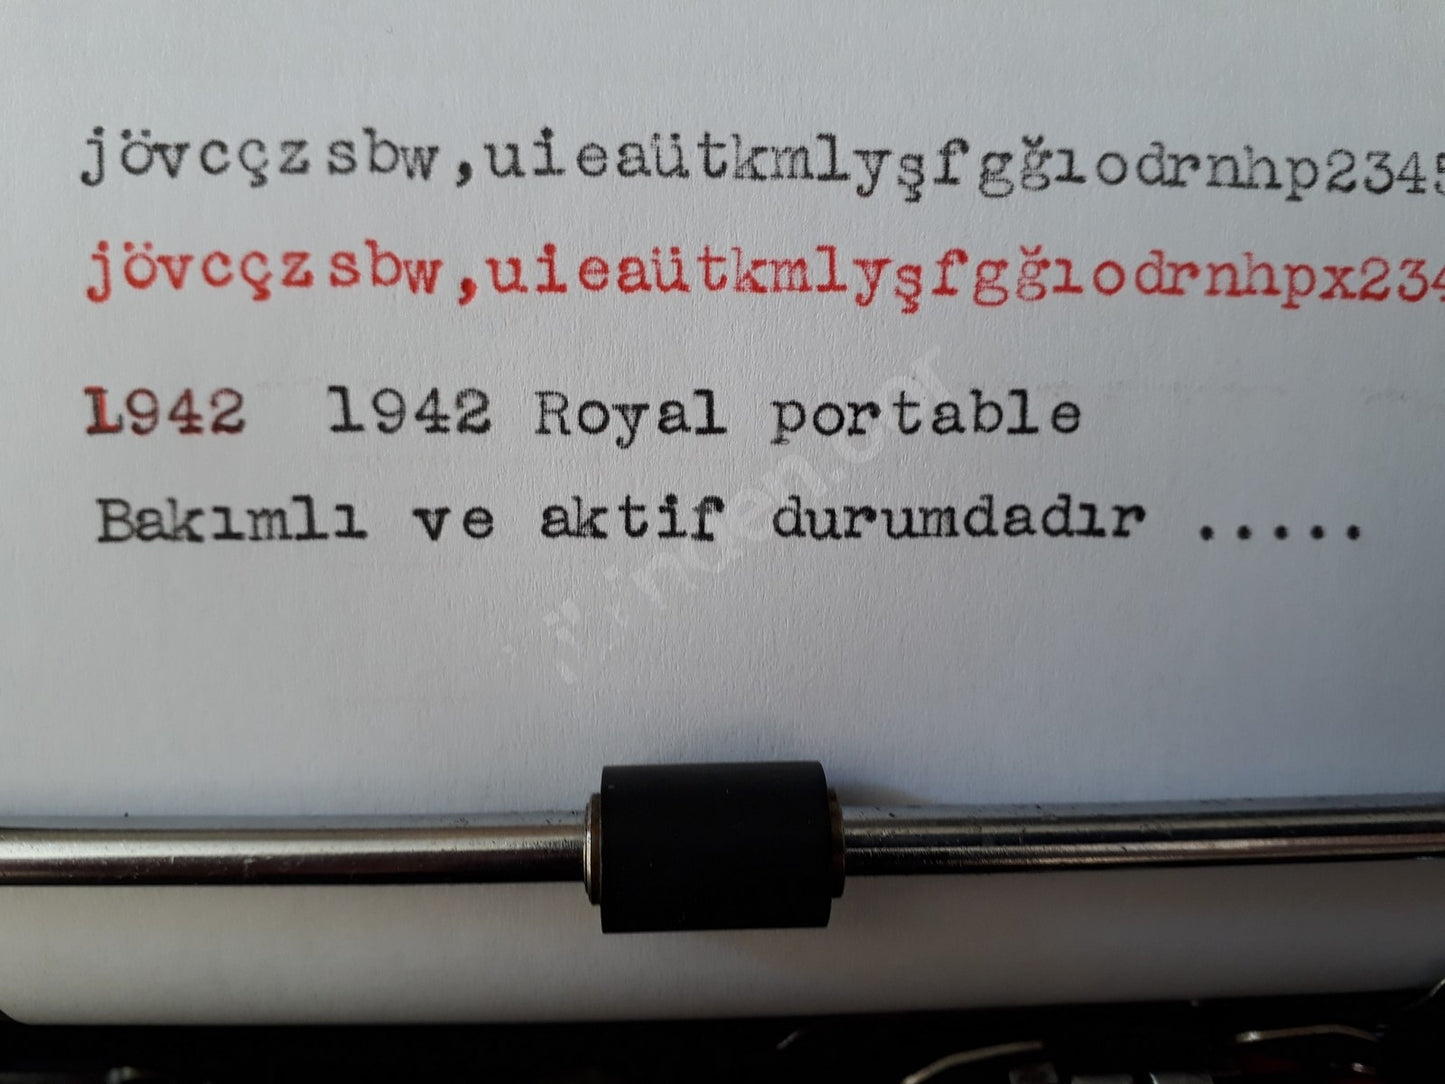 1940s American production, Royal Quiet de luxe typewriter, Metal Heavy Case Typewriter